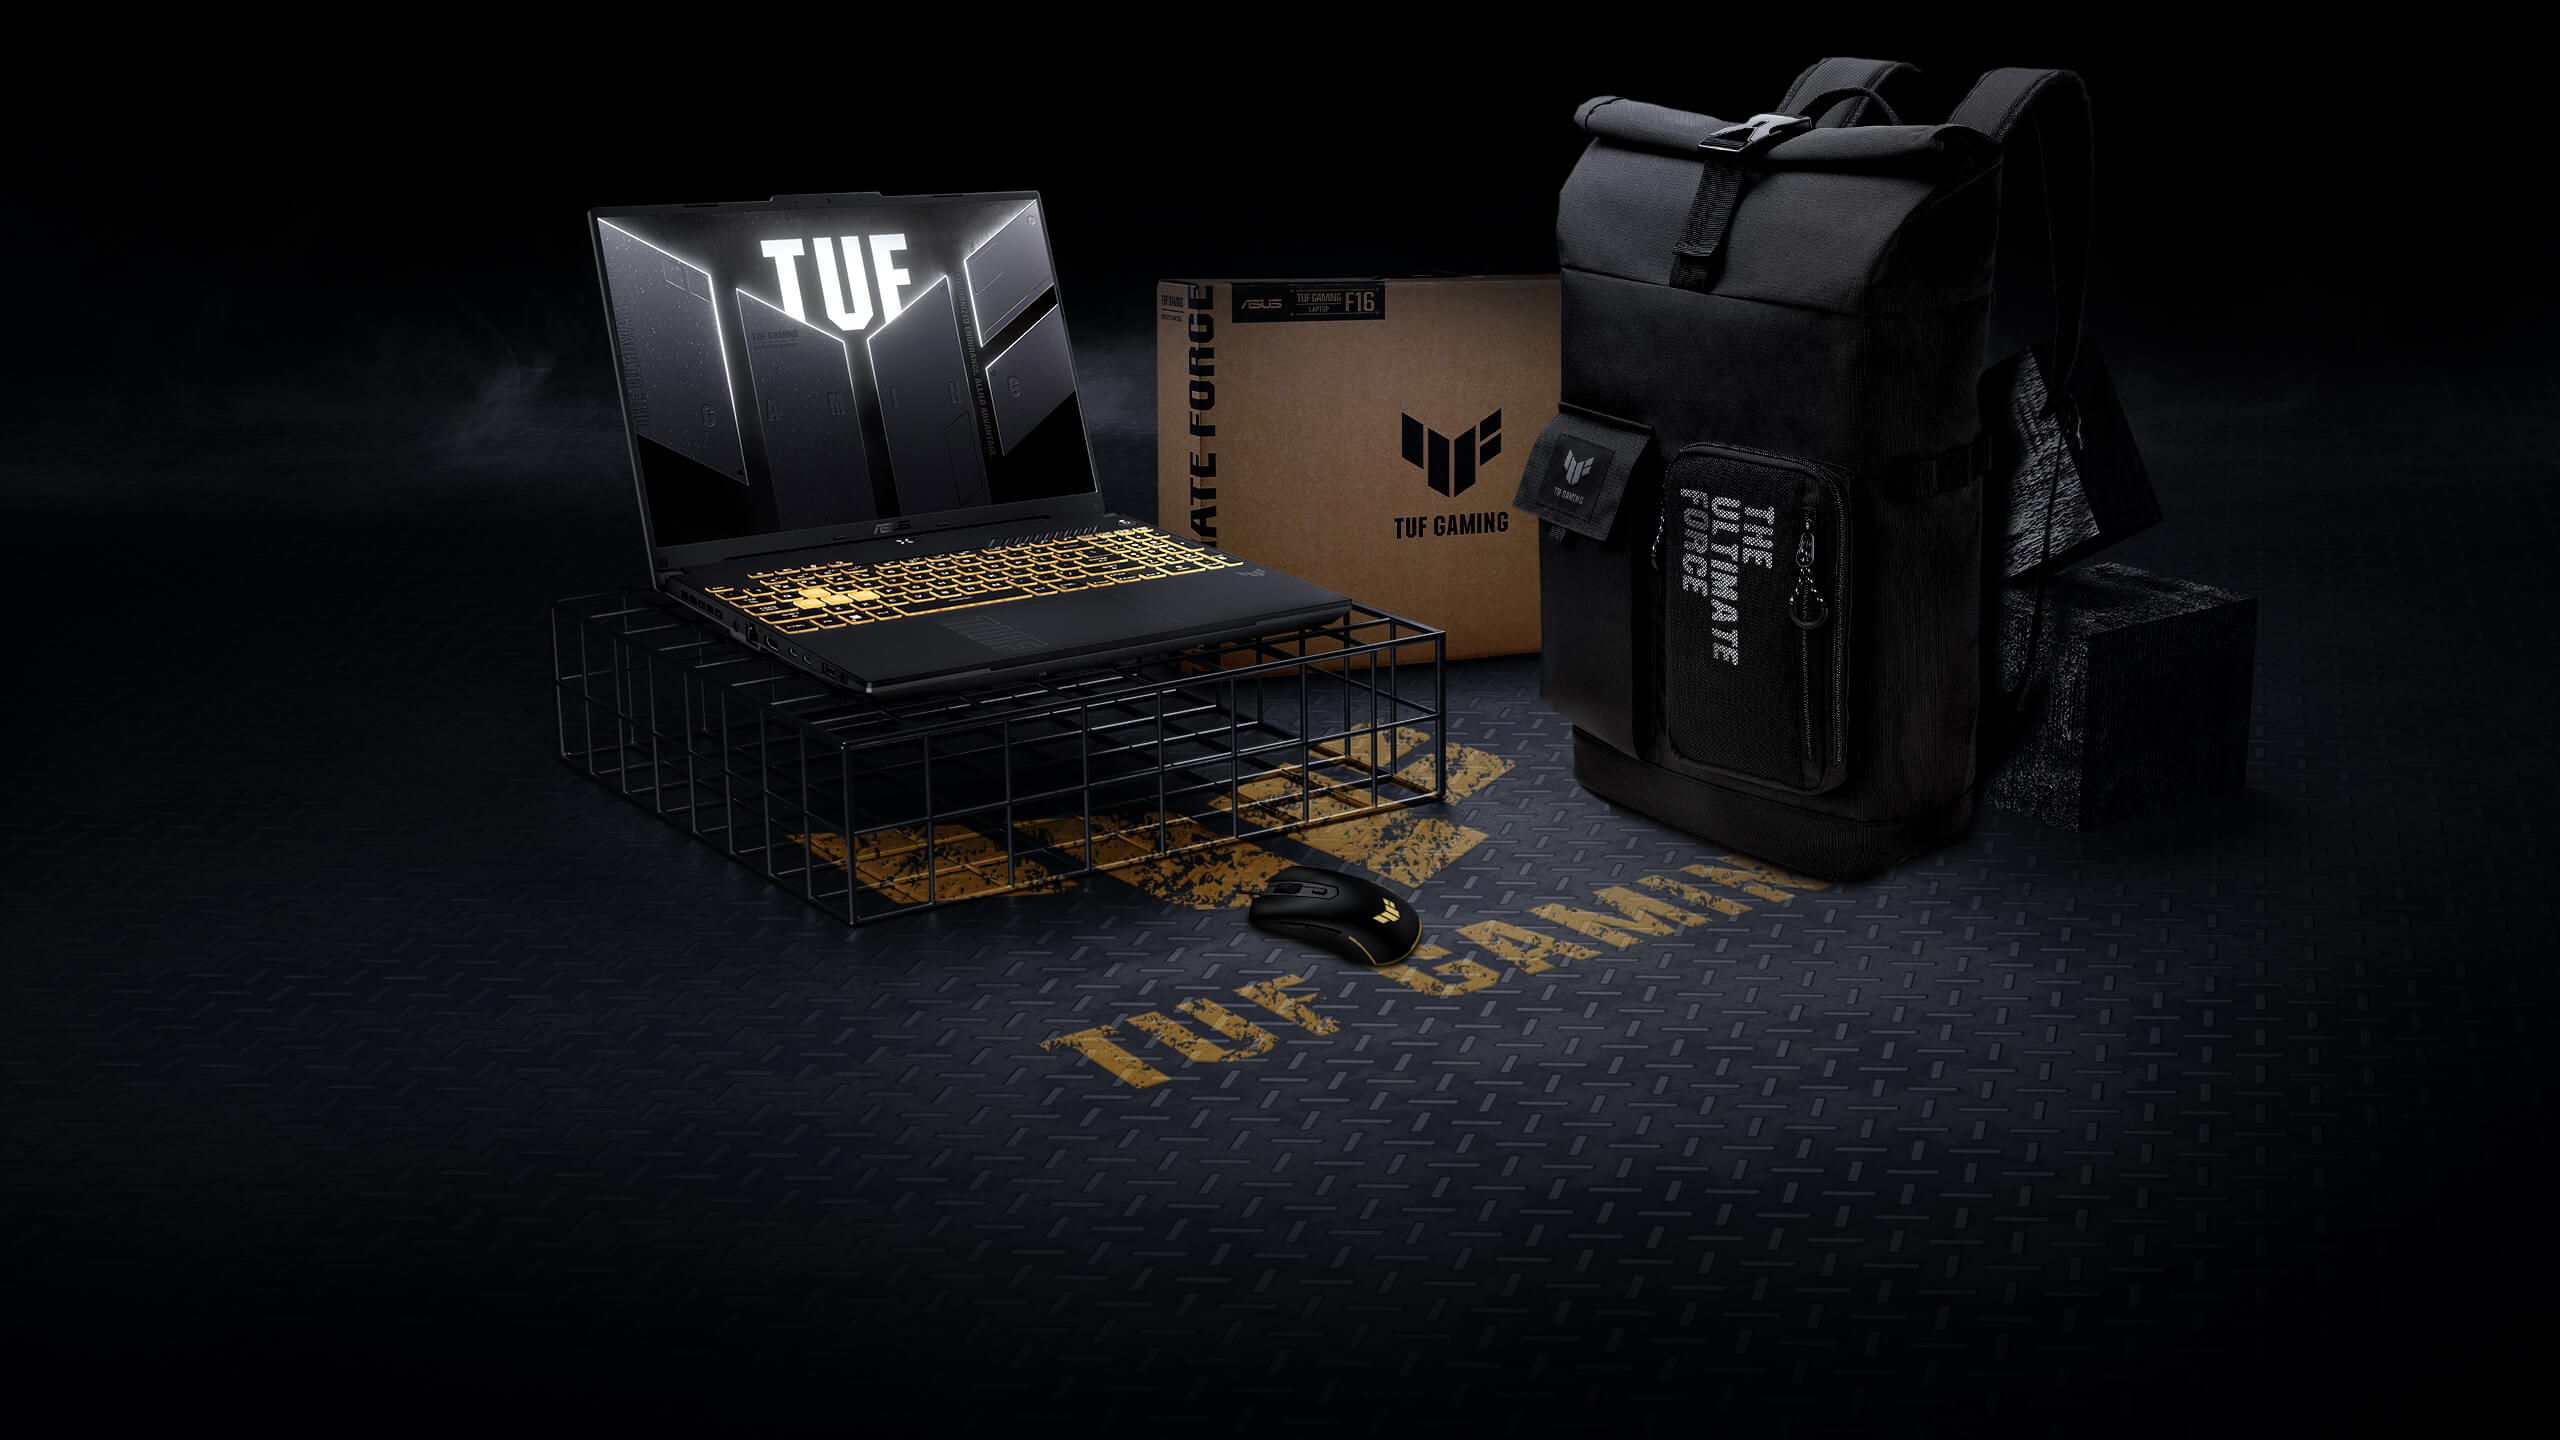 TUF Gaming A16 電競筆電旁邊排列著 TUF 電競滑鼠、TUF 電競後背包和有 TUF 貼紙的包裝盒。